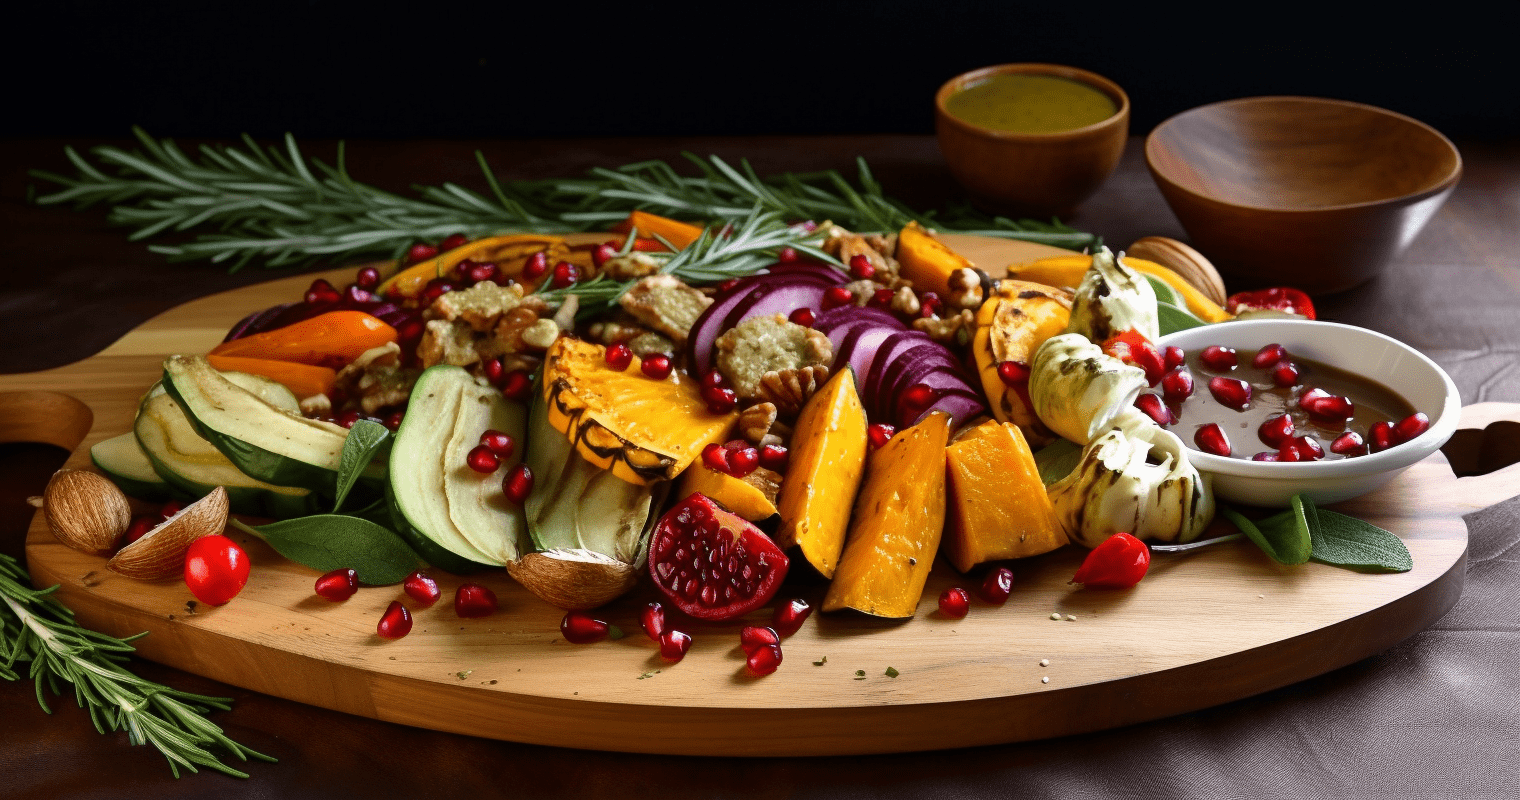 Autumn Harvest Salad with Roasted Vegetables and Pomegranate Vinaigrette